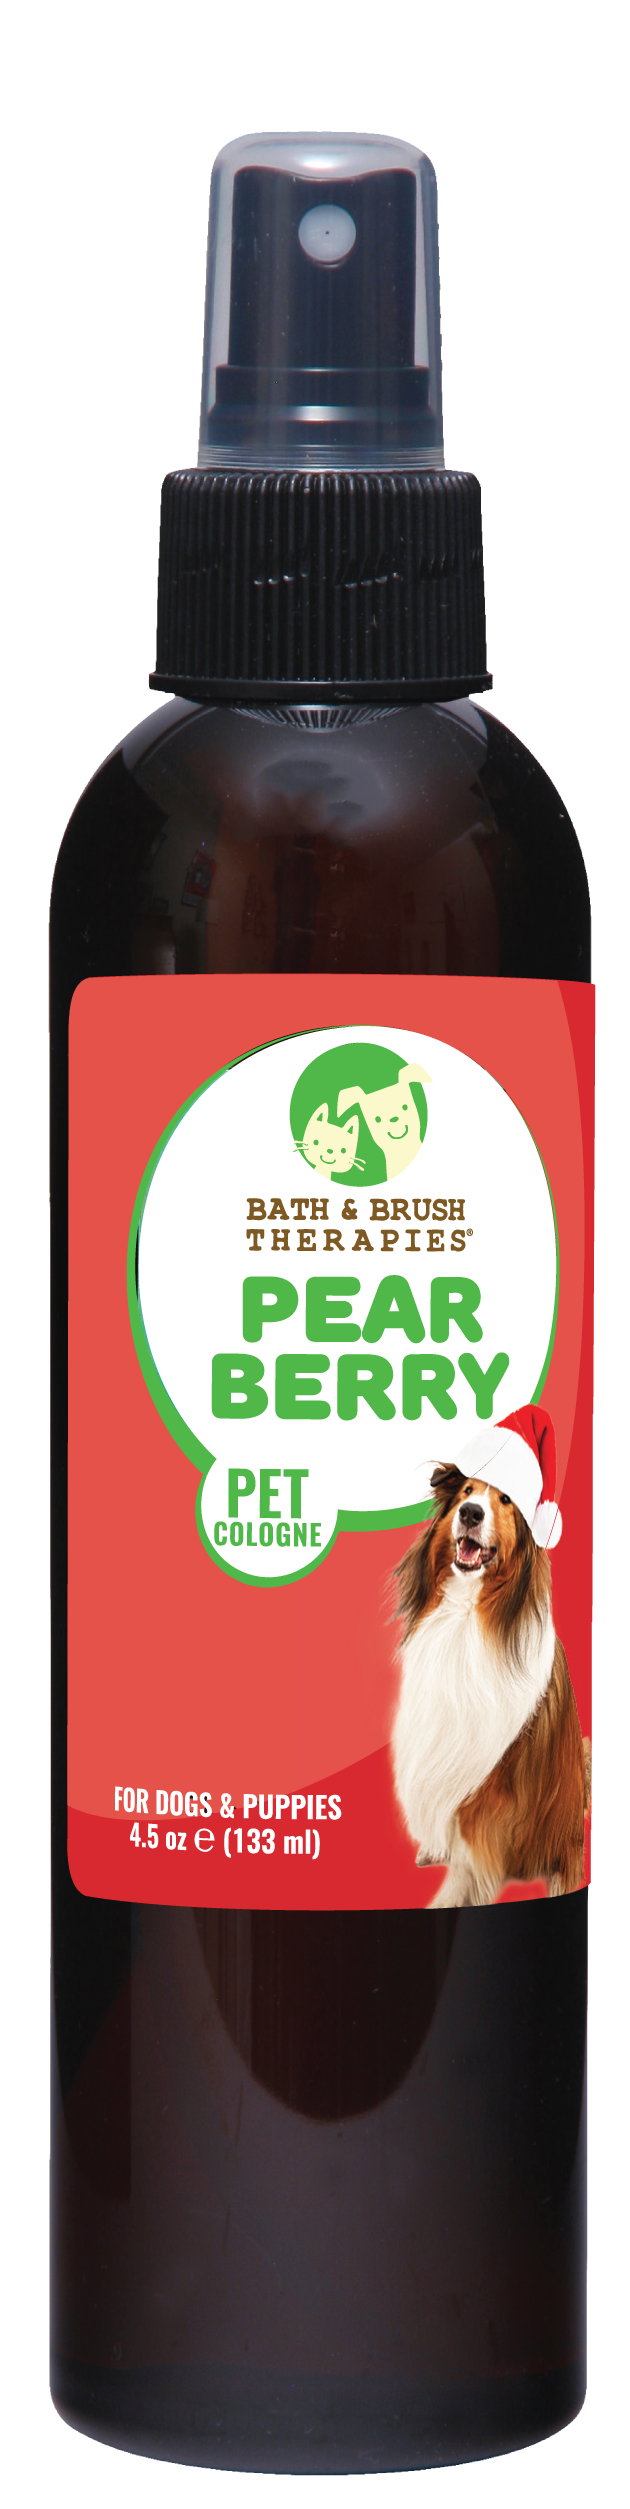 Pear Berry Pet Cologne